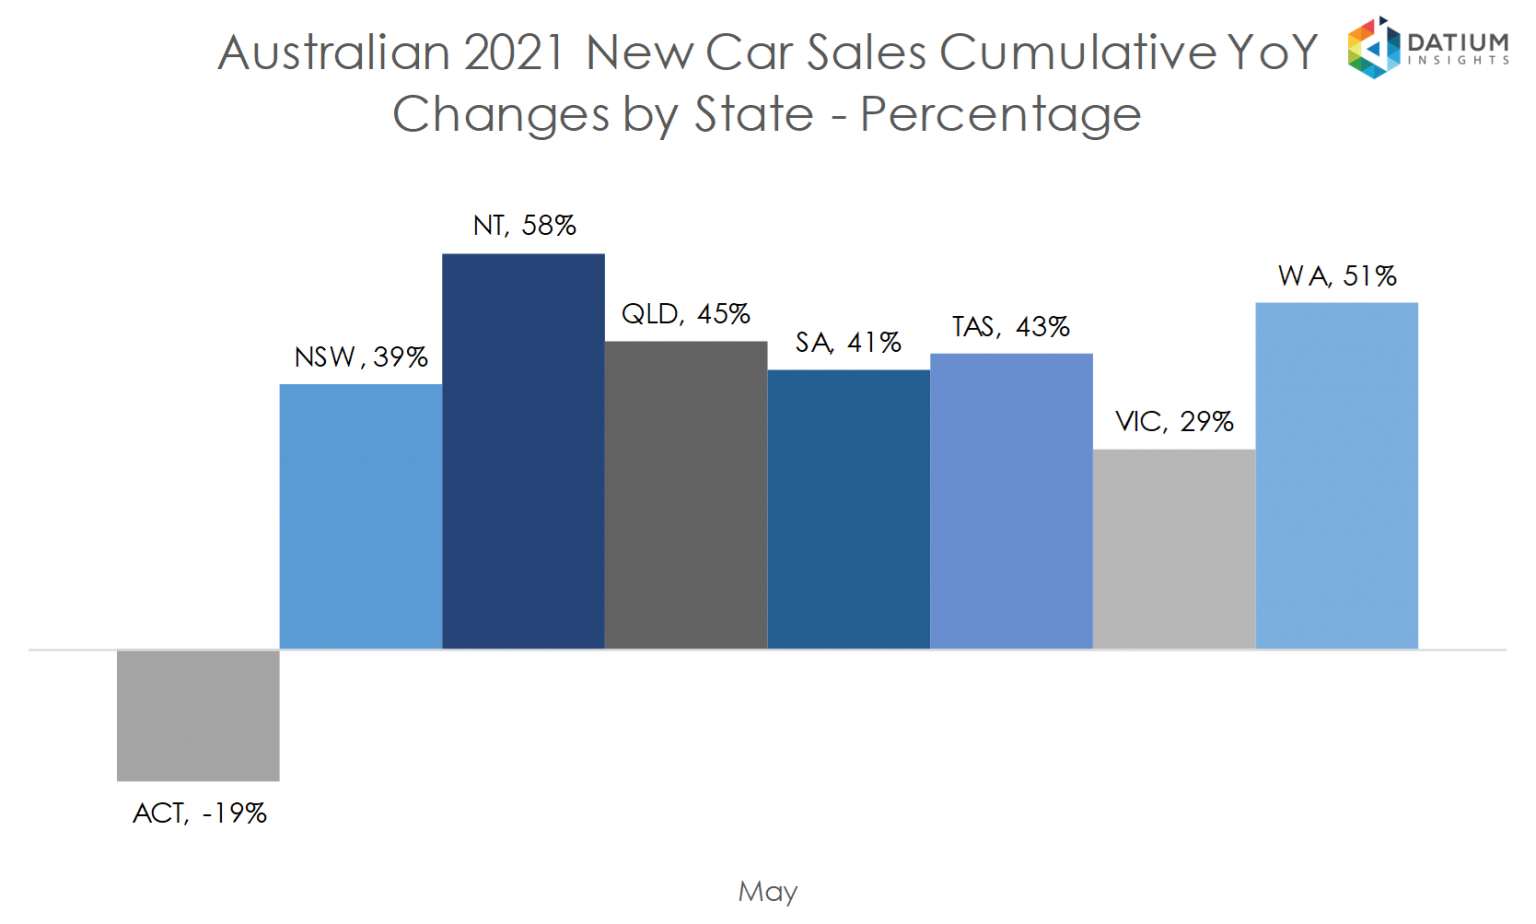 VFACTS: New Car Sales Insights May 2021 - Datium Insights